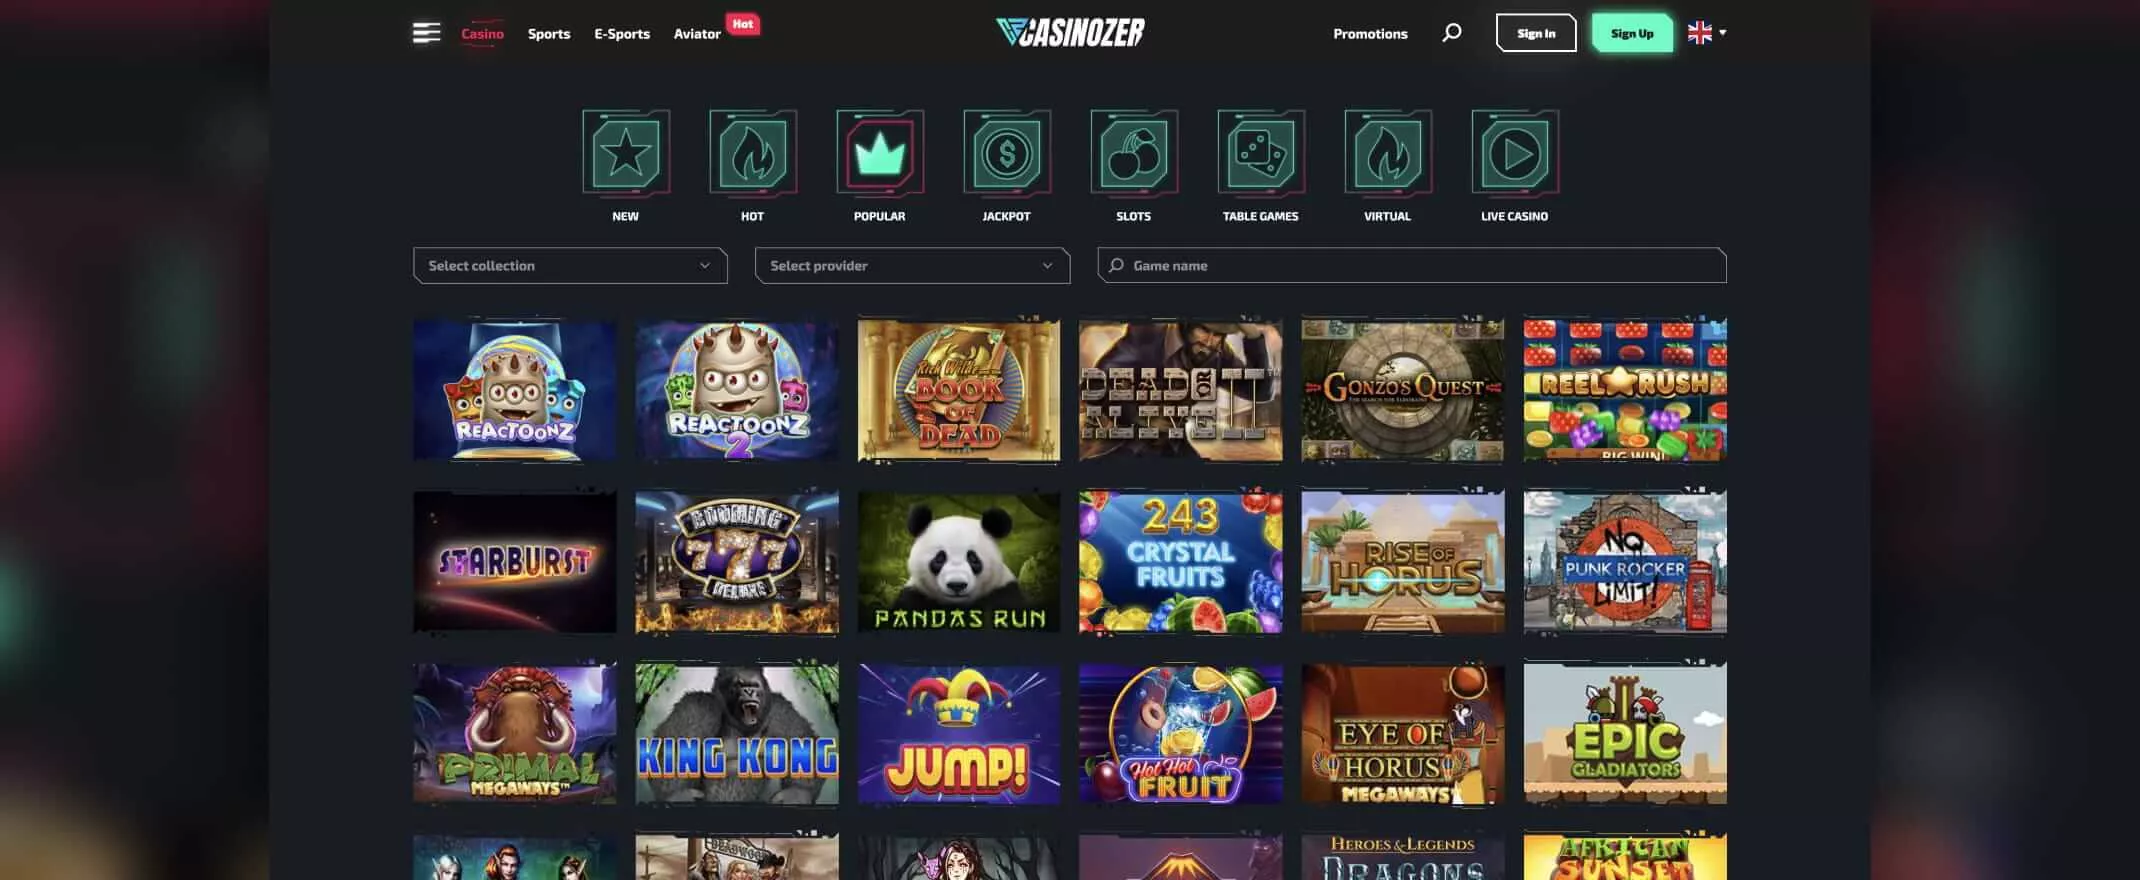 Casinozer games screenshot